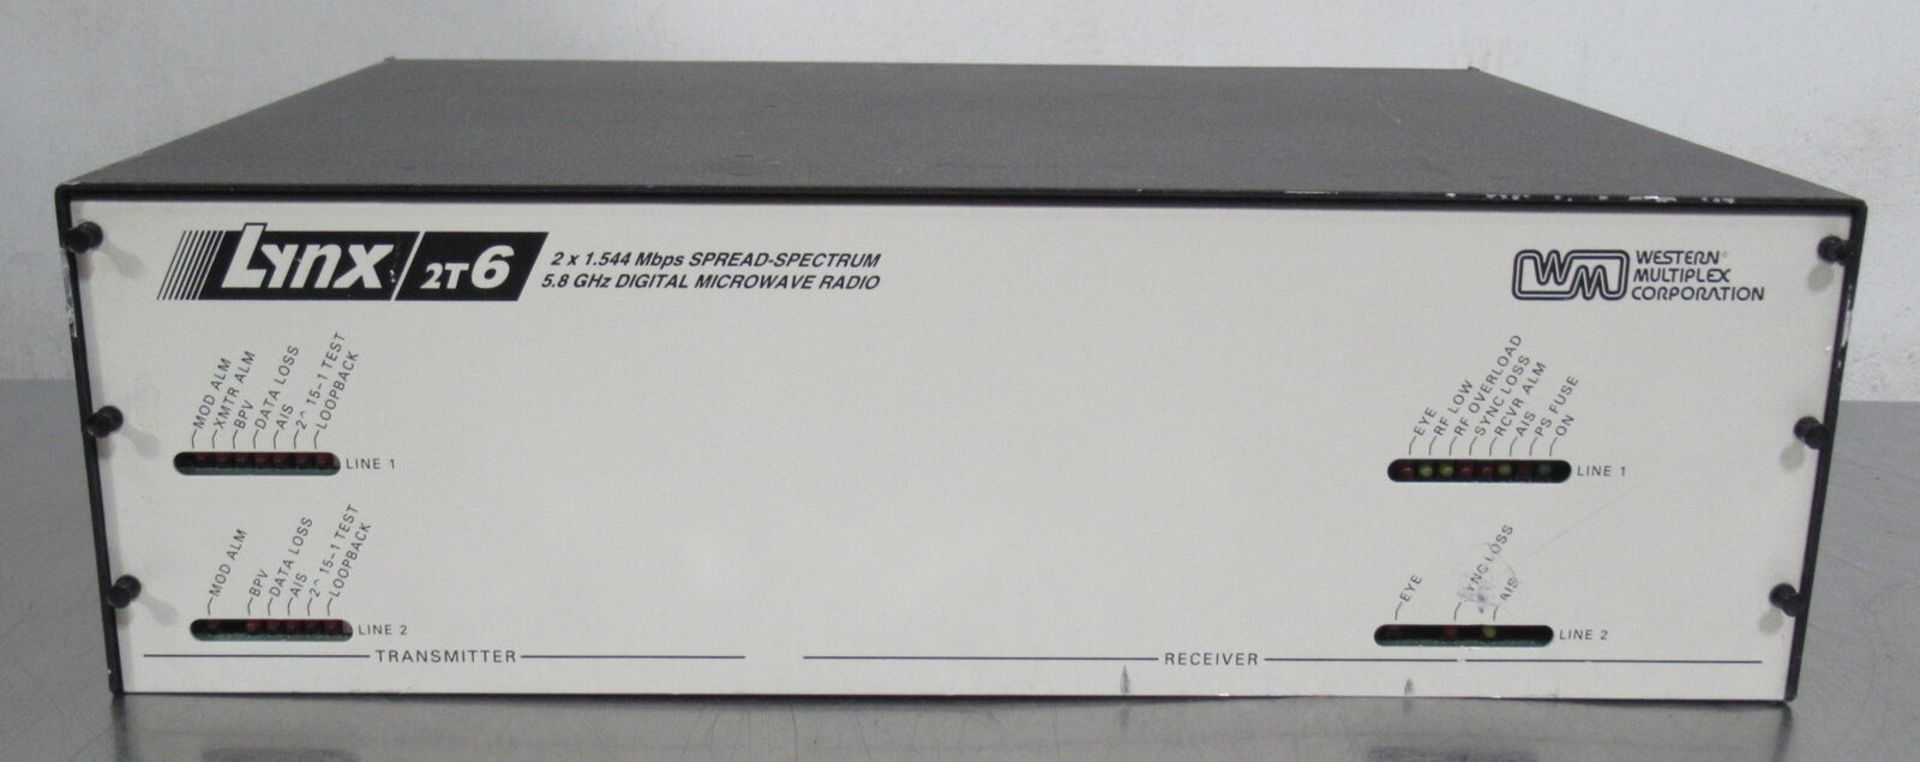 Western Multiplex Corp. Lynx 2T6 5.8GHz Digital Microwave Radio 24500-A1 - Gilroy - Image 2 of 5